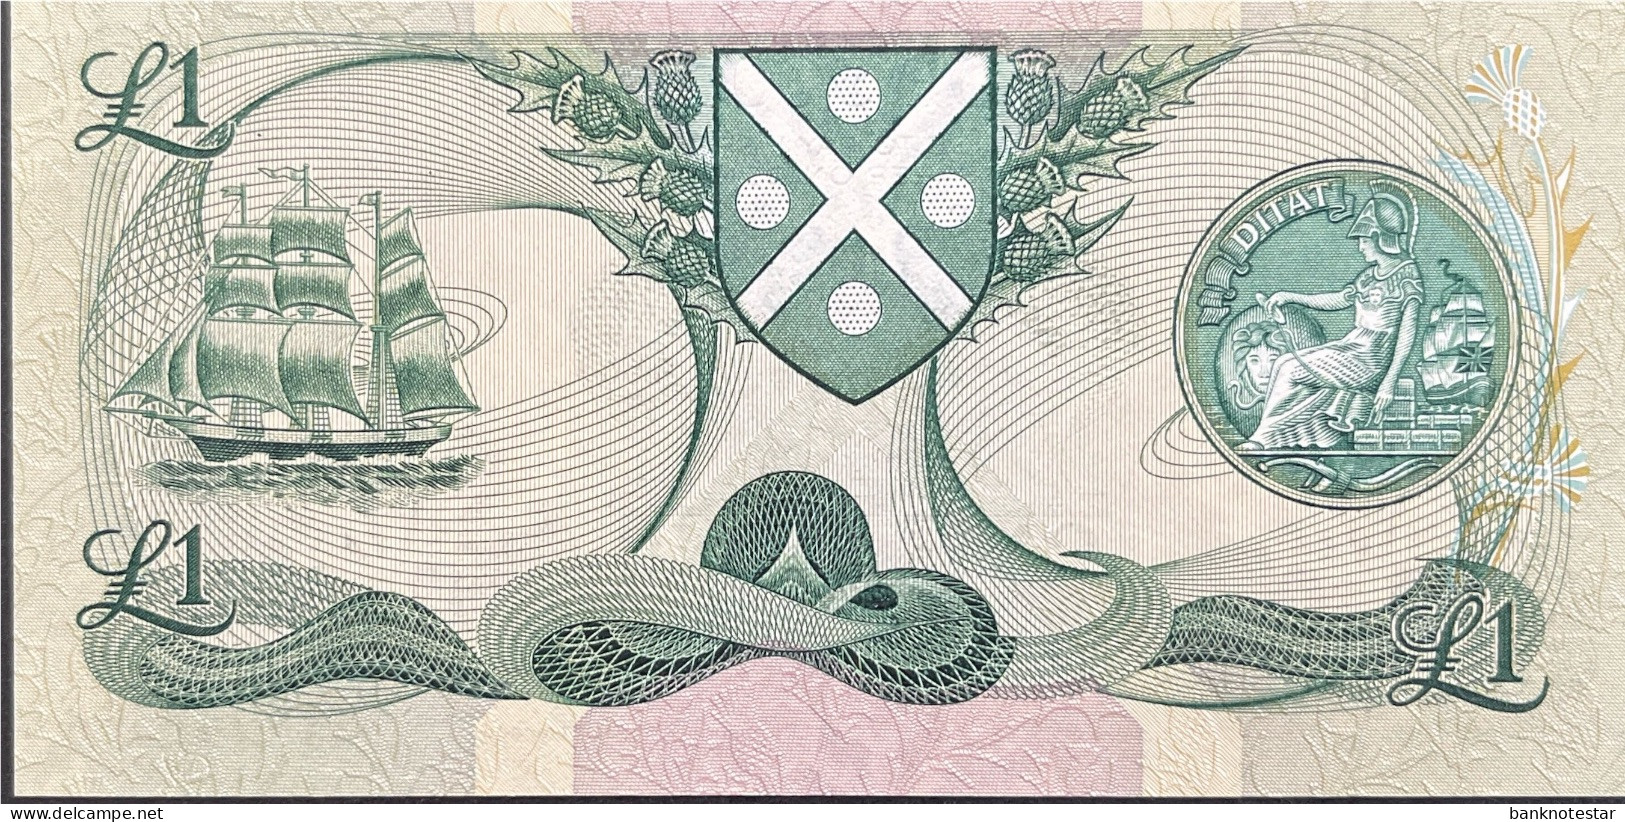 Scotland 1 Pound, P-111f (7.10.1983) - UNC - 1 Pound